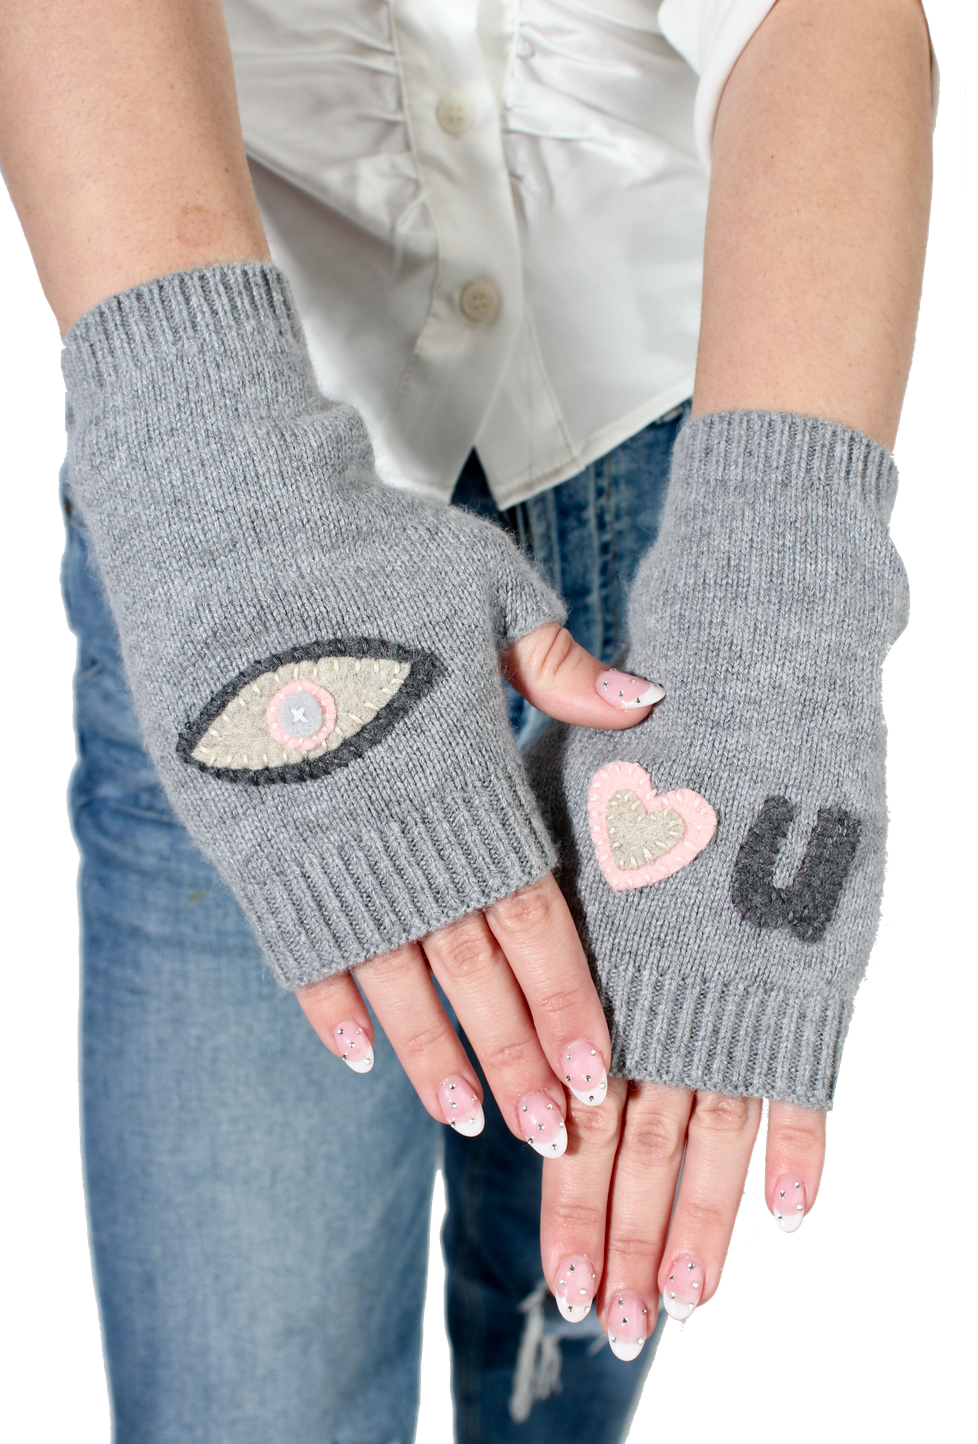 Cashmere | Grey Fingerless Gloves